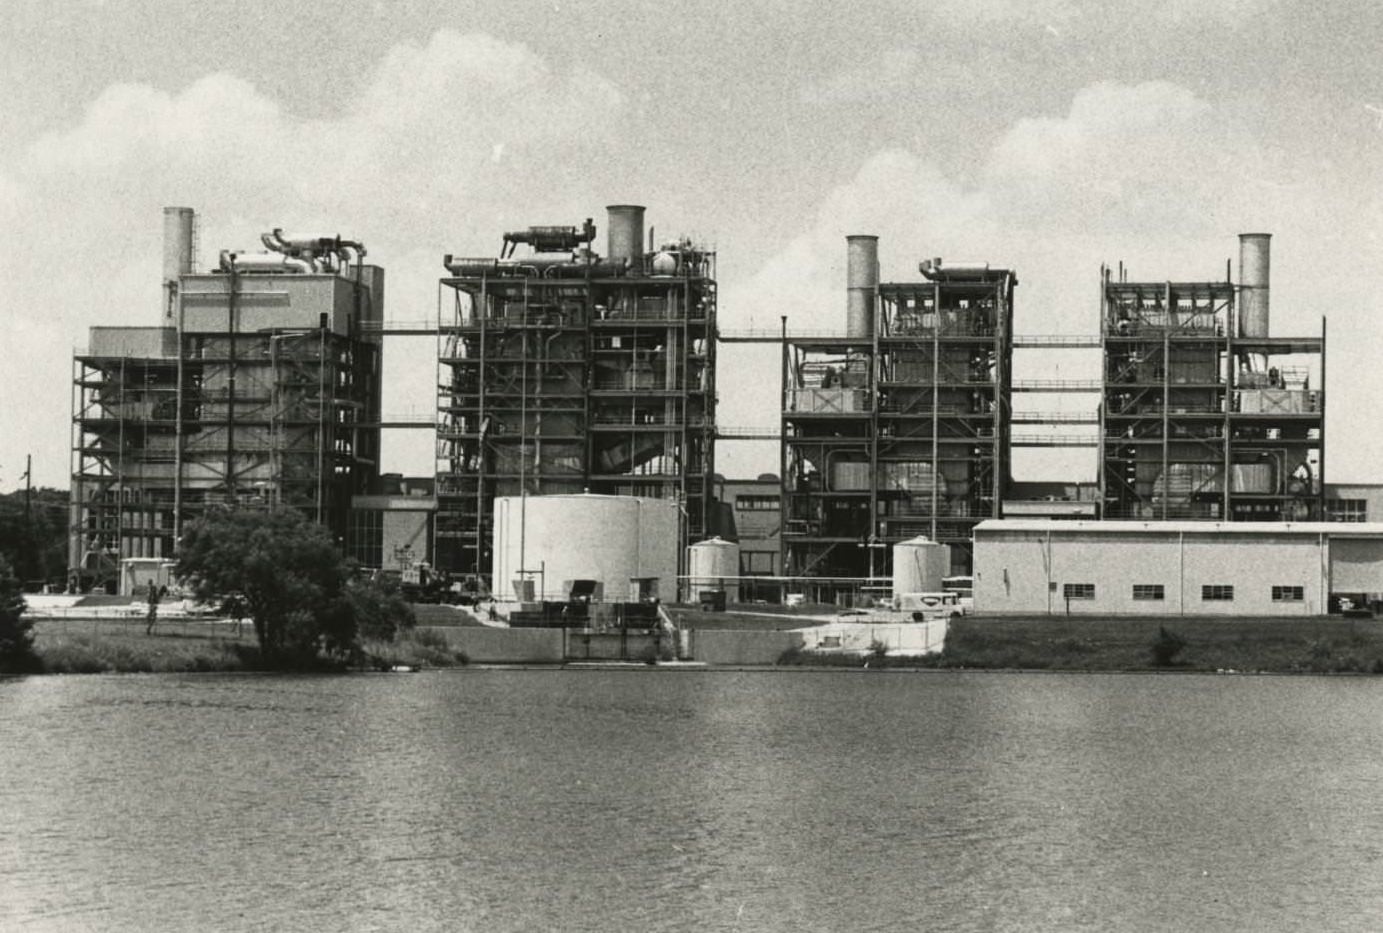 Holly Street Power Plant, 1970